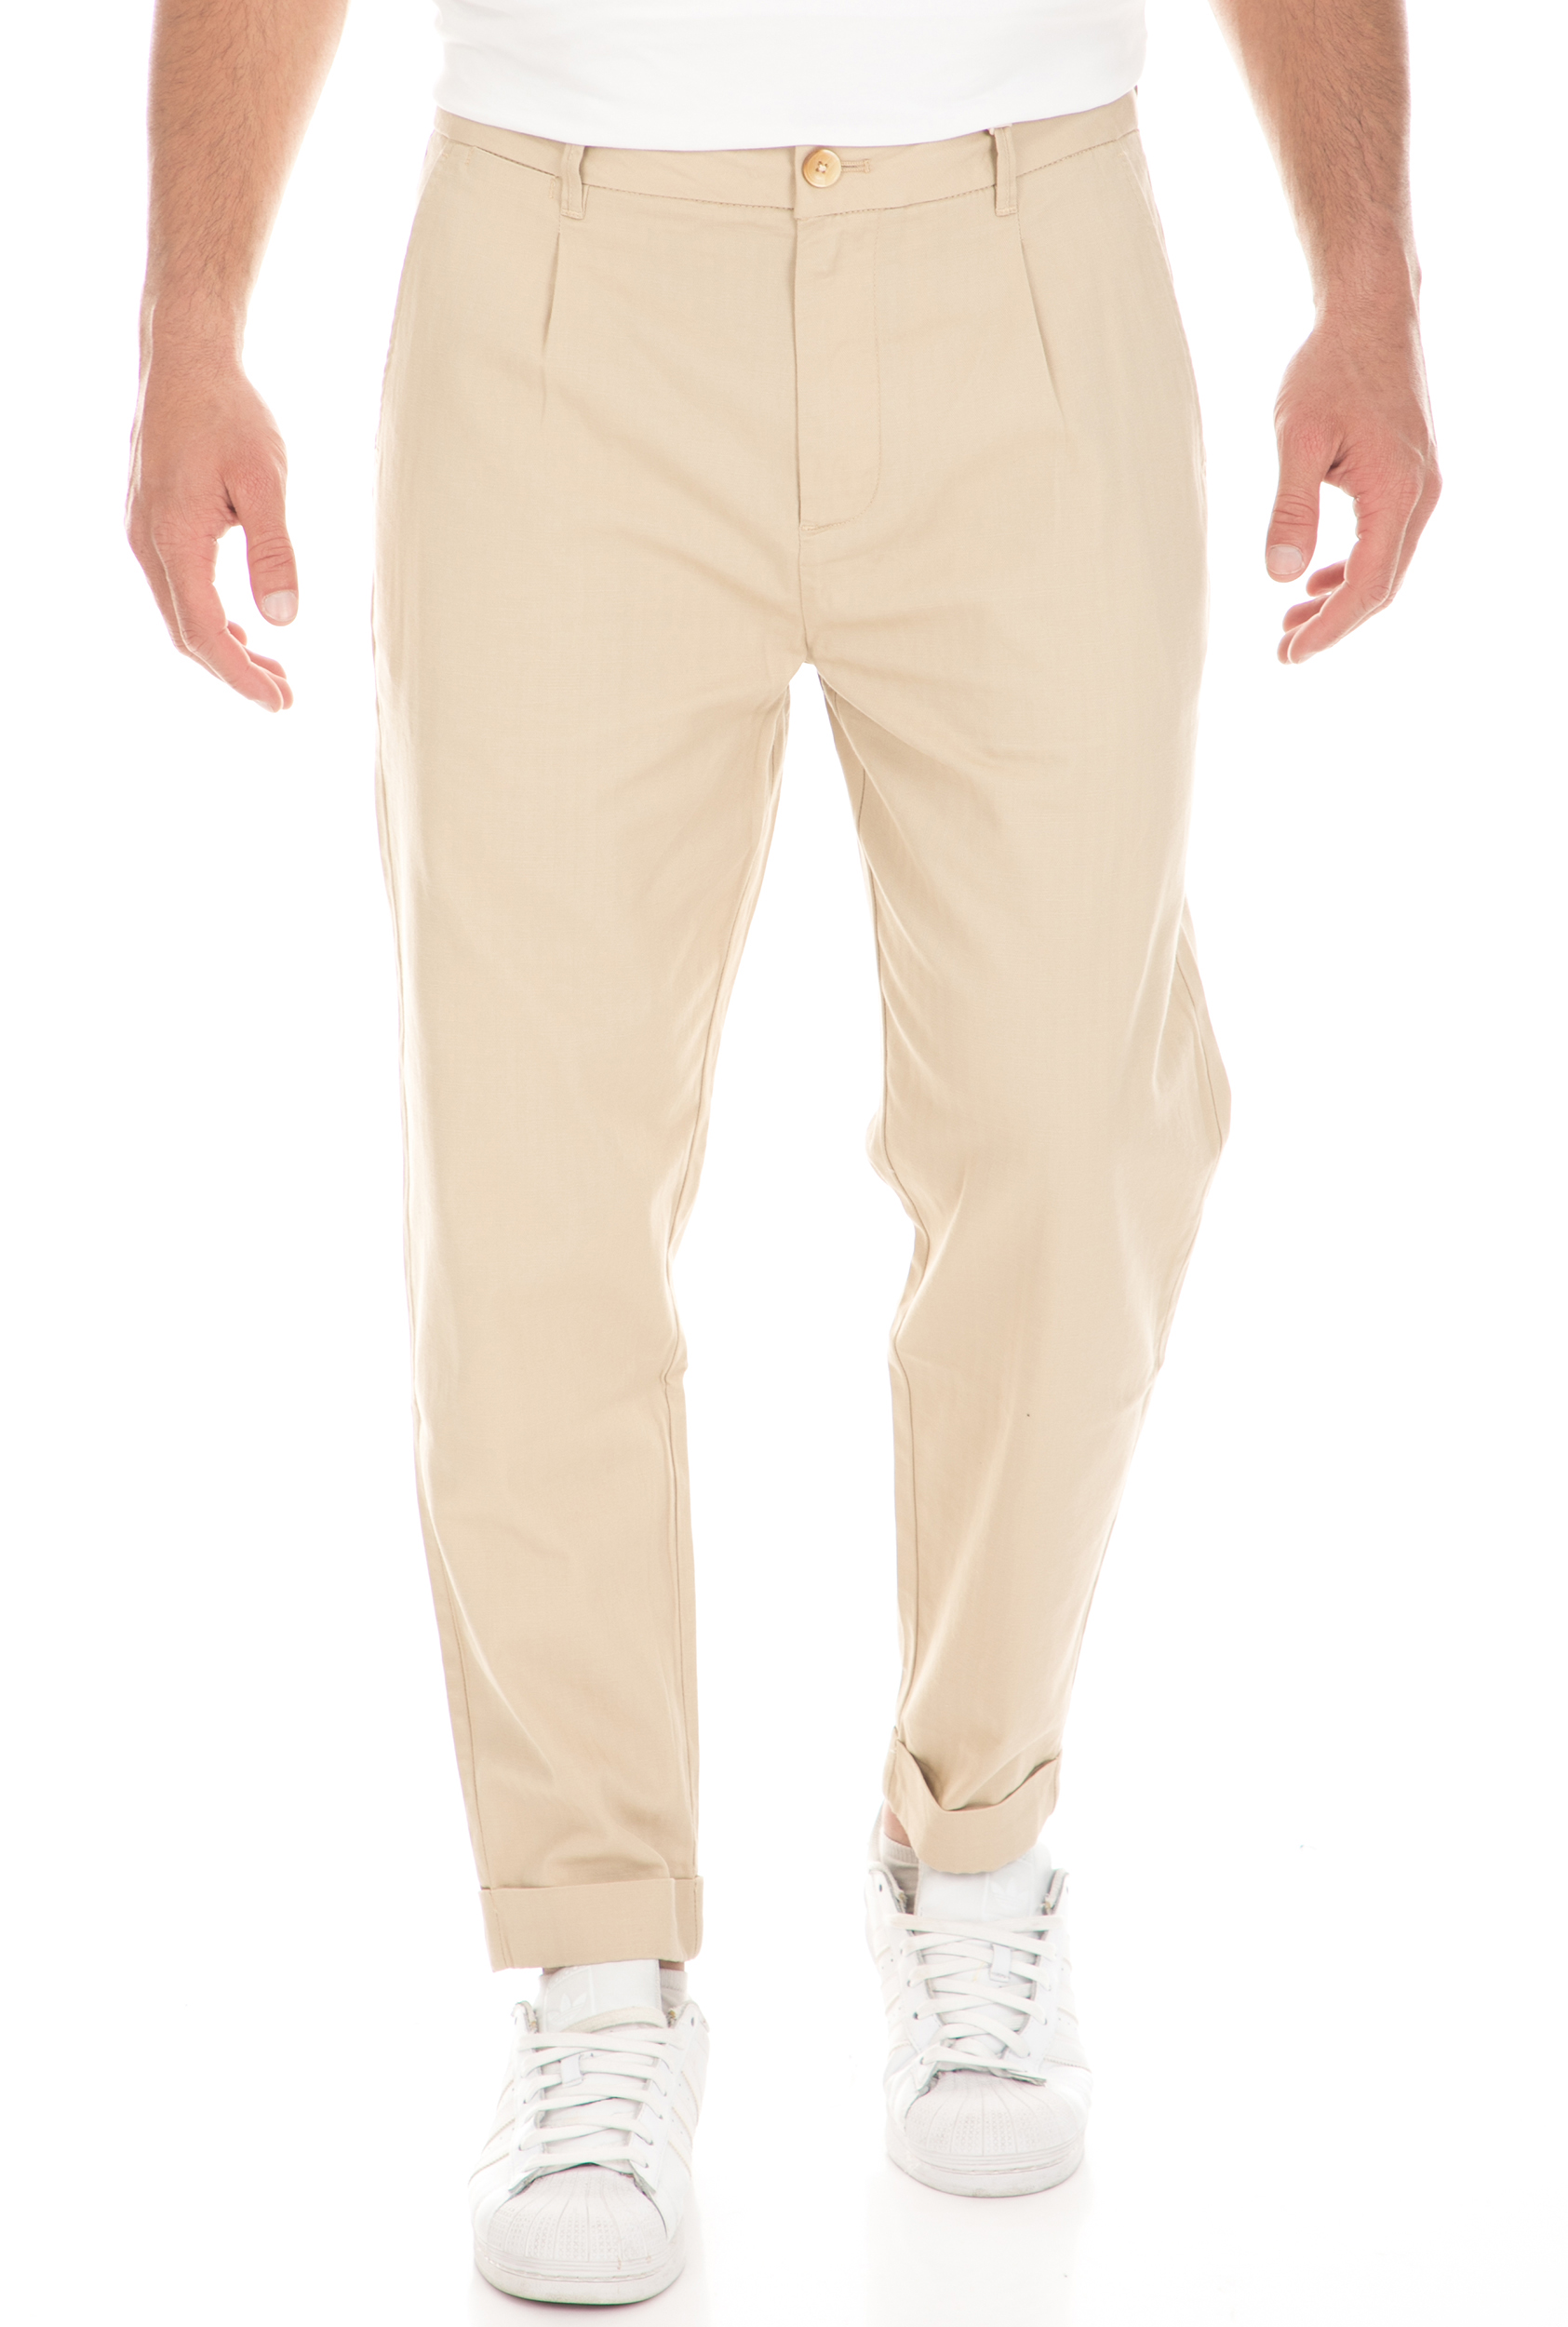 SCOTCH & SODA - Ανδρικό παντελόνι SEASONAL FIT- Relaxed chino SCOTCH & SODA μπεζ Ανδρικά/Ρούχα/Παντελόνια/Chinos